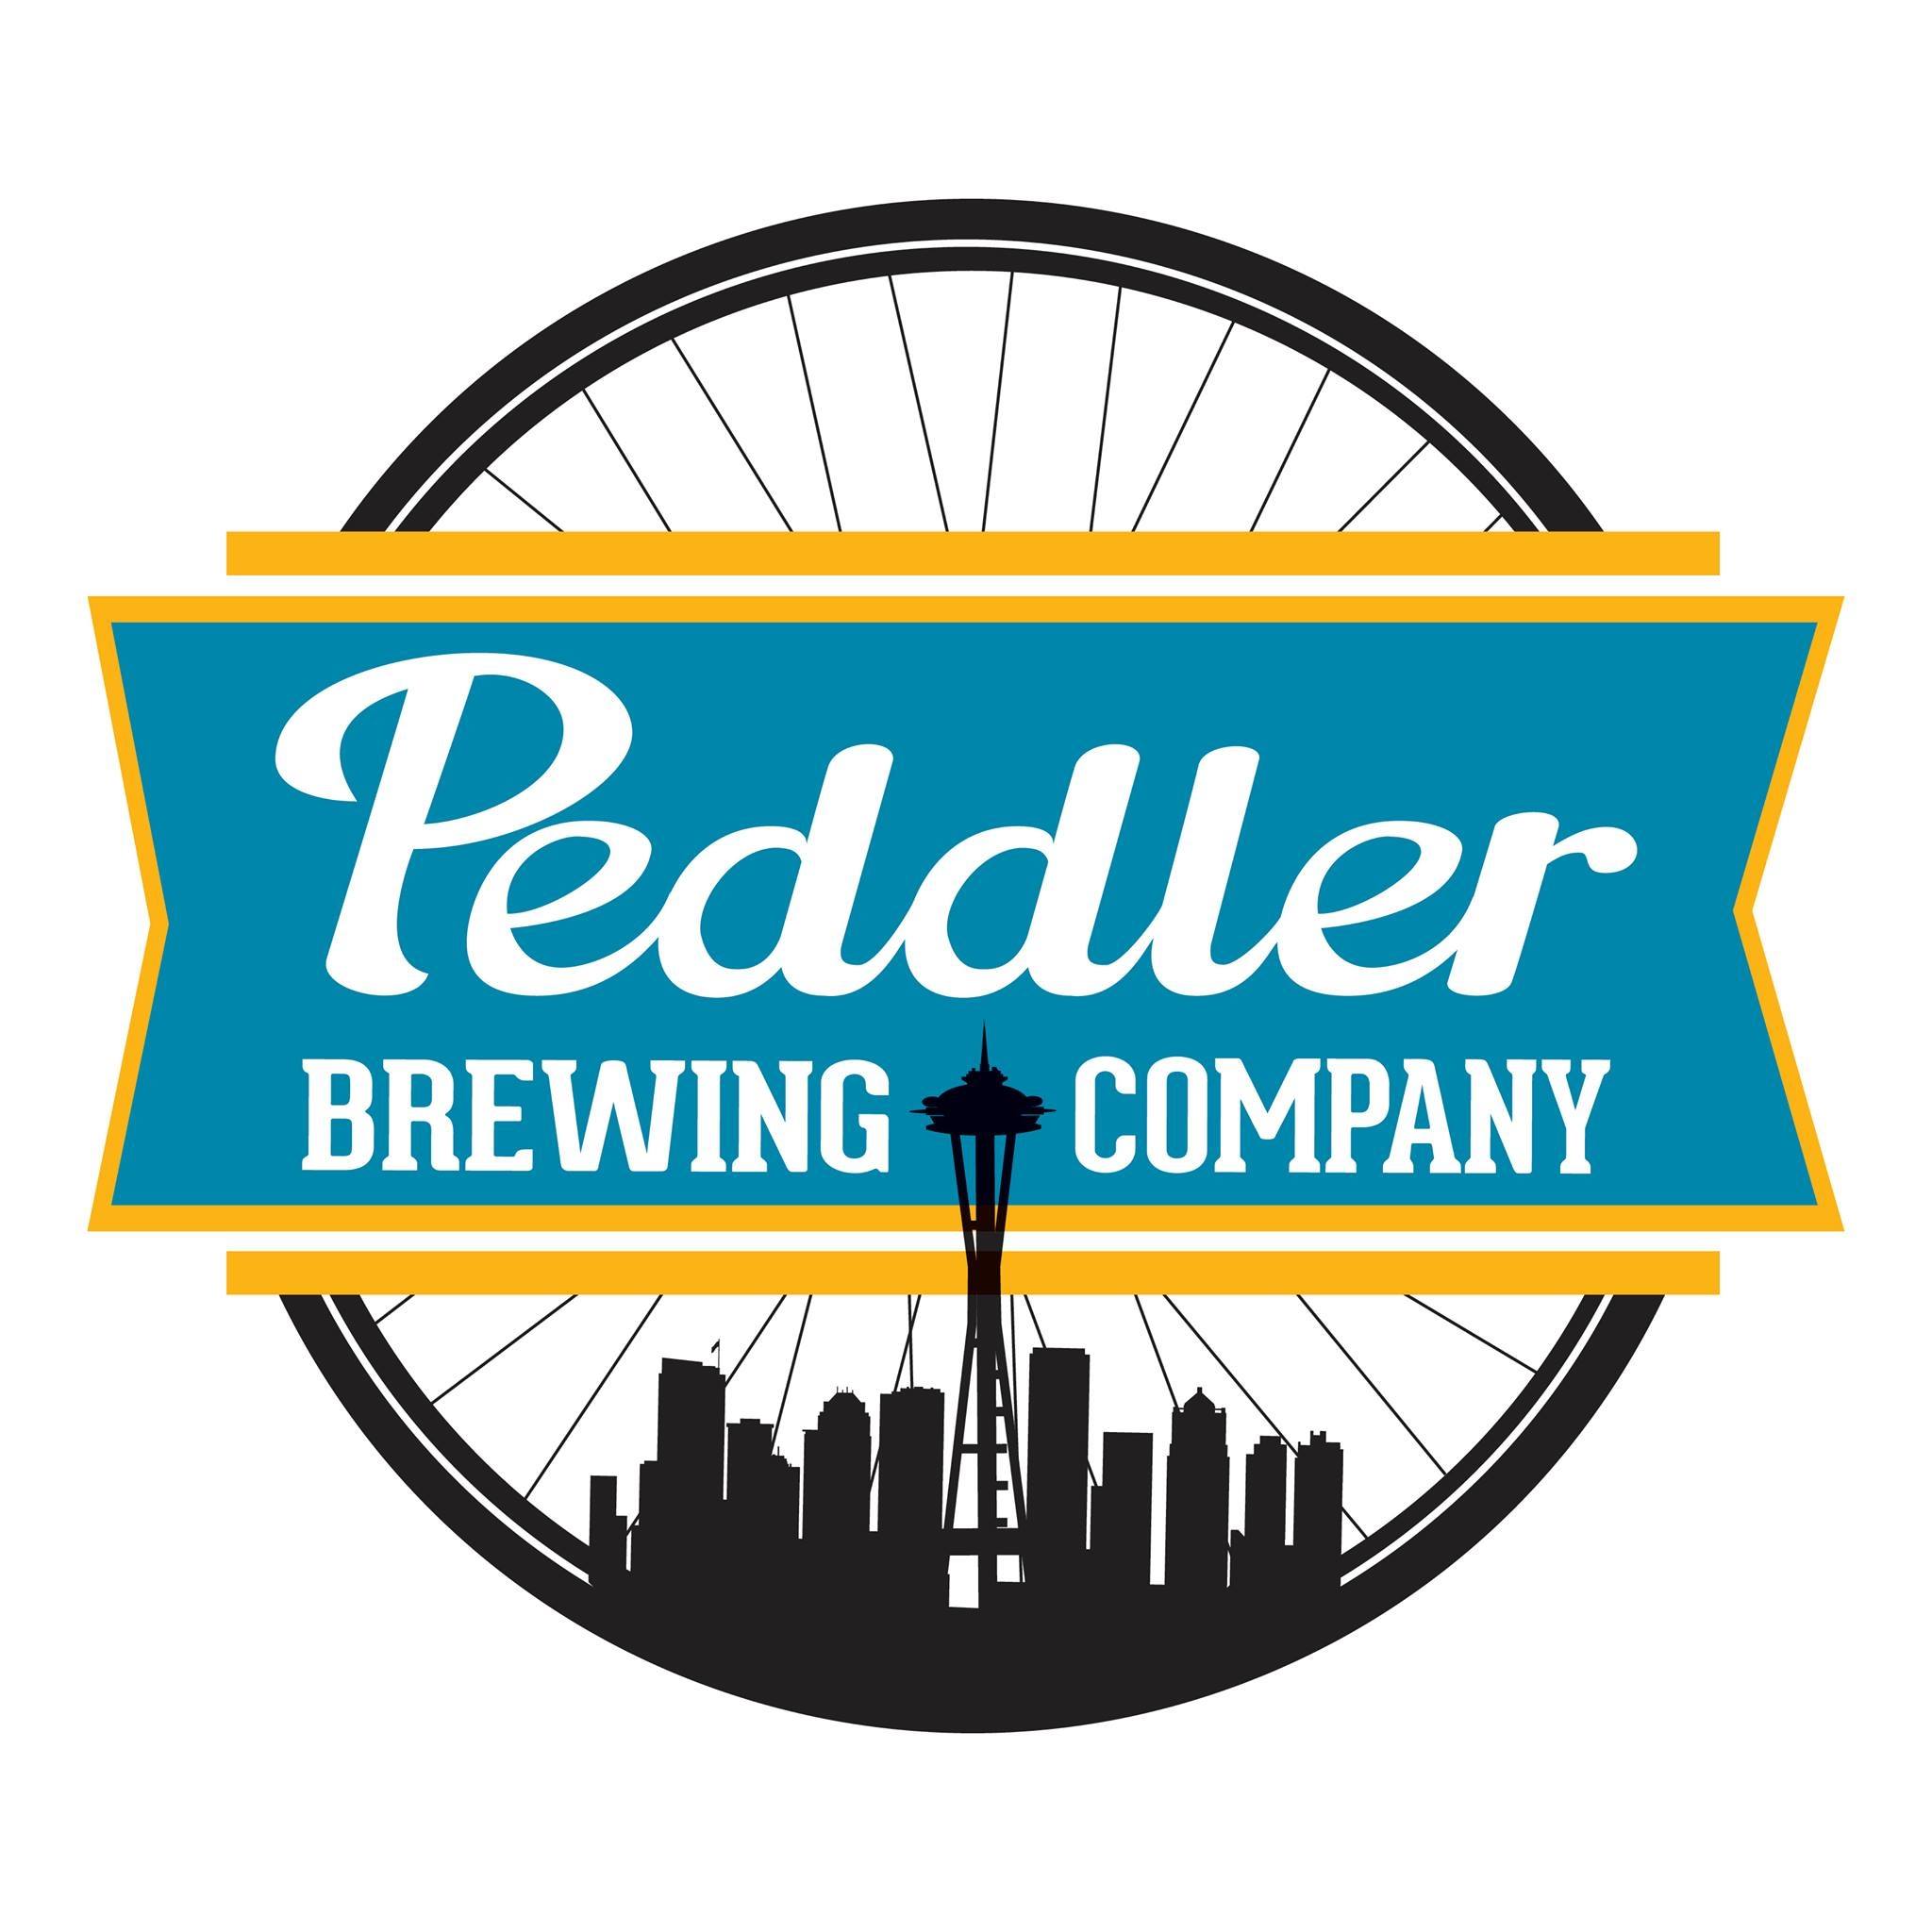 Company logo of Peddler Brewing Company